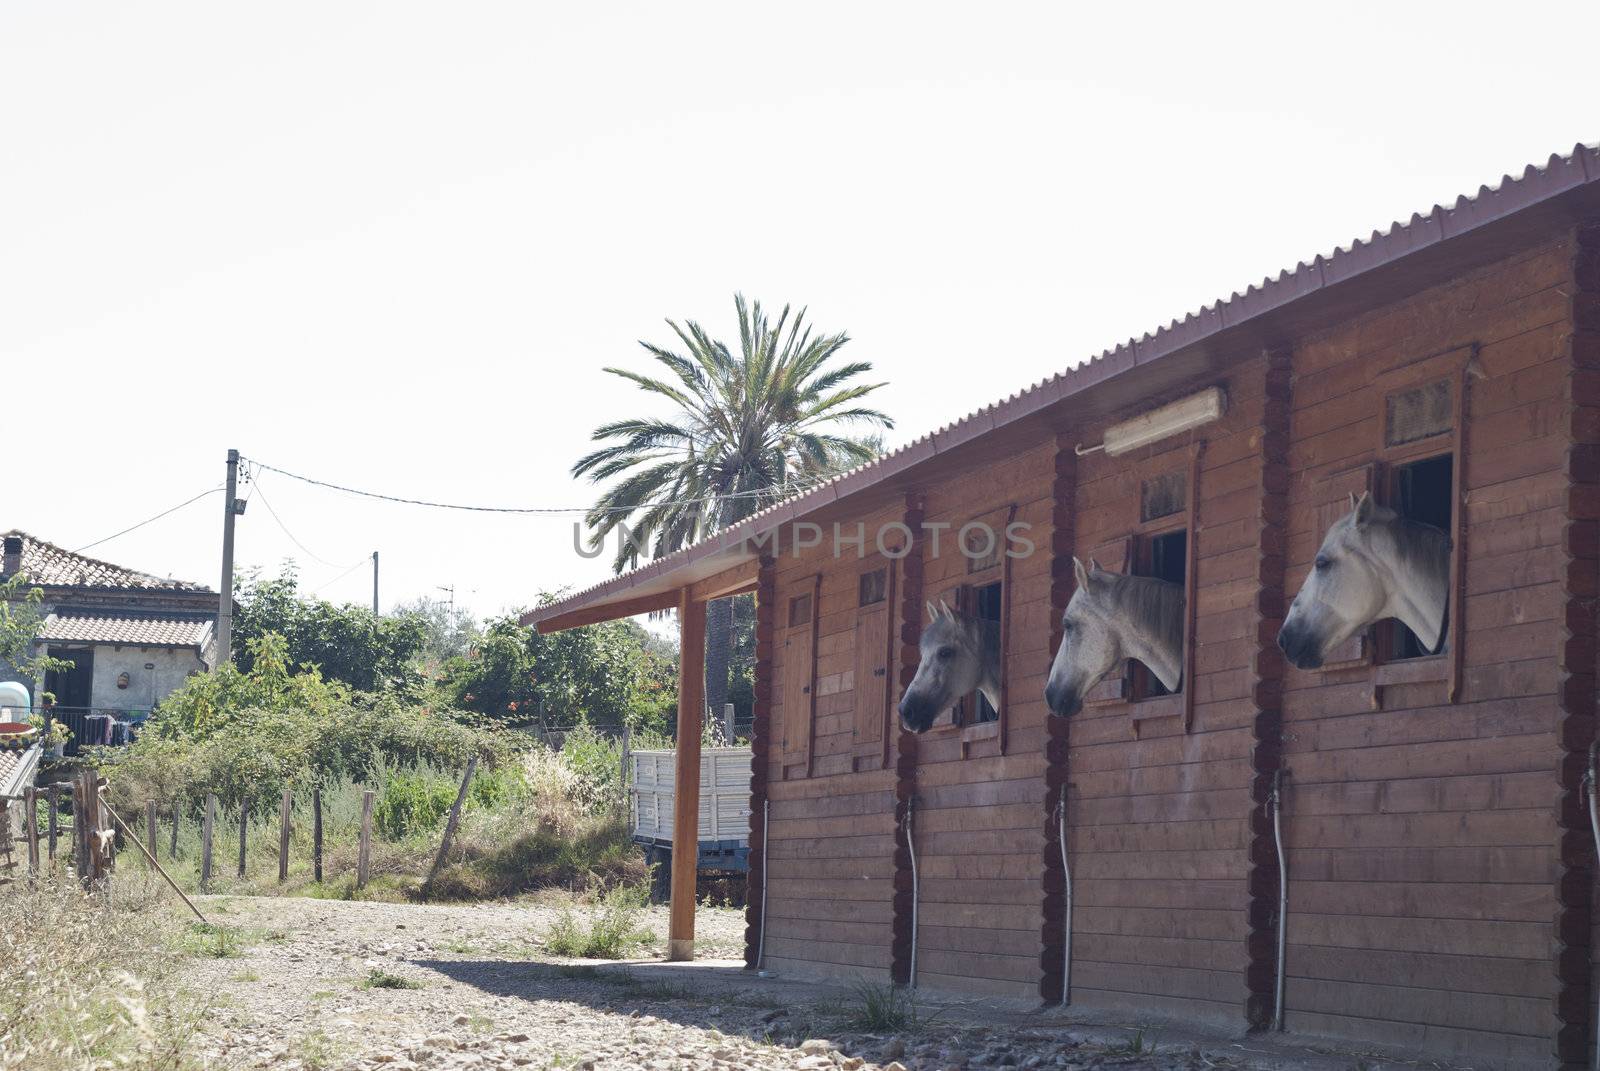 Horses in their stable by gandolfocannatella